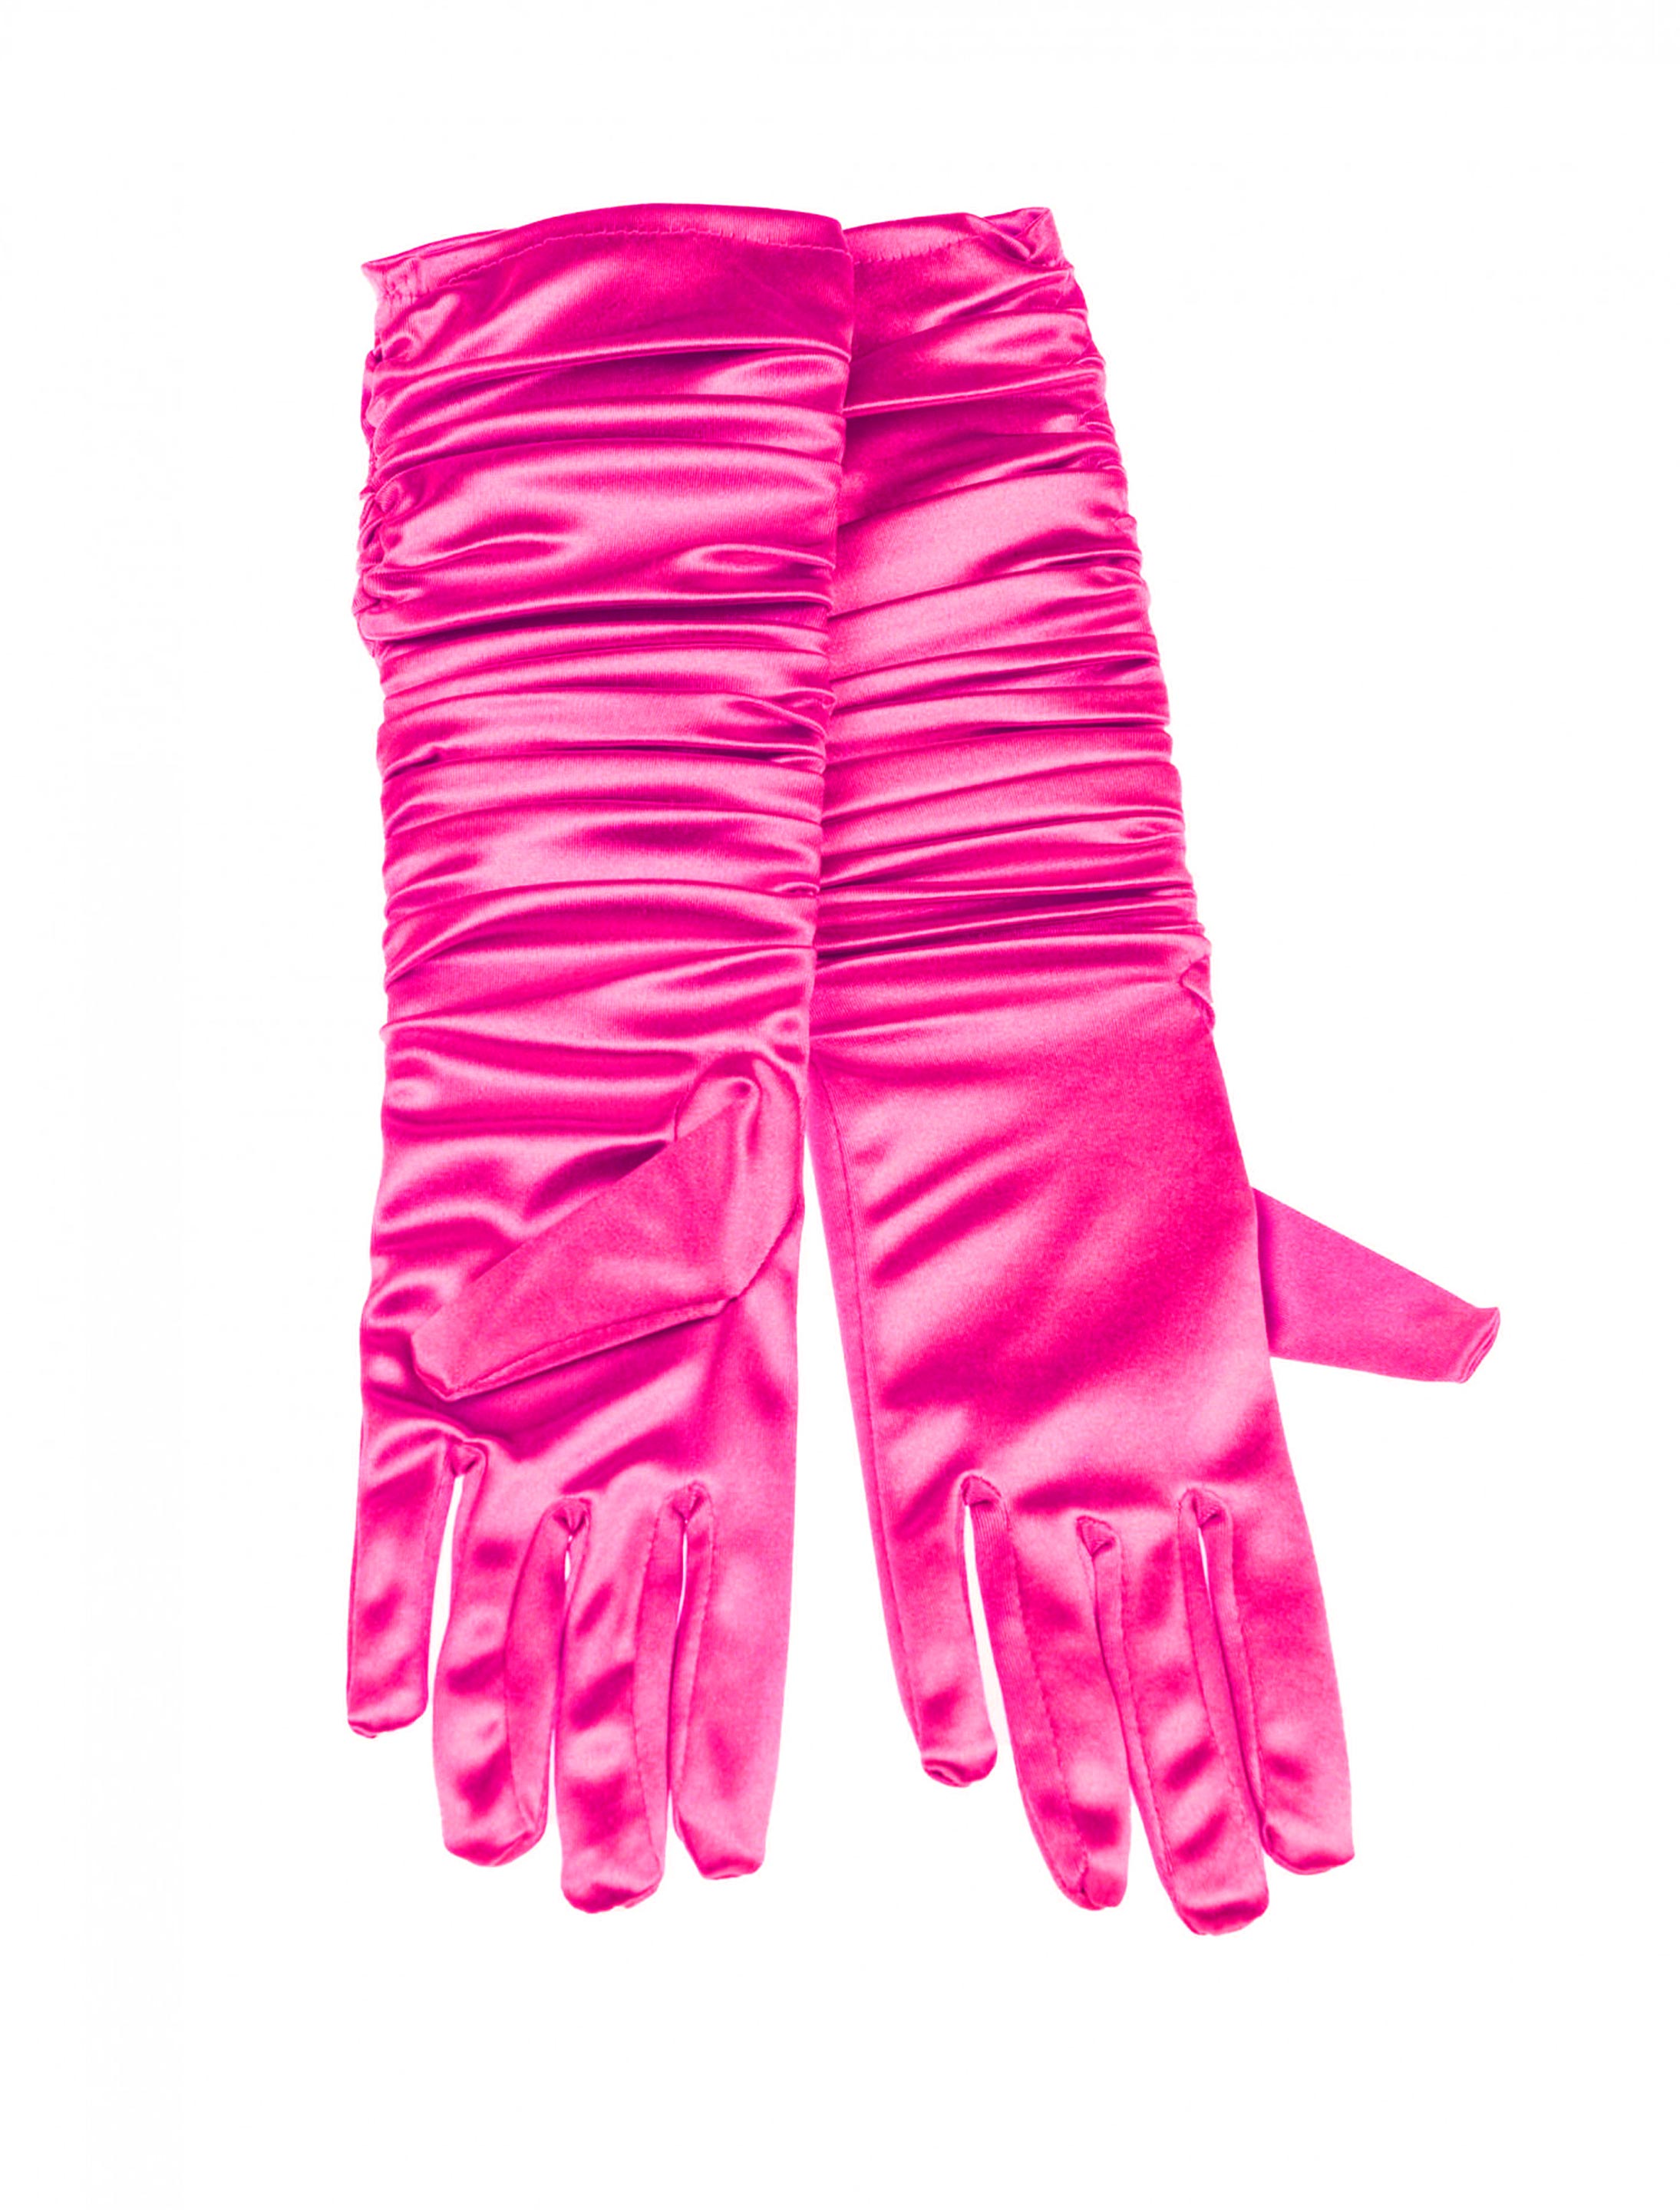 Handschuhe Satin gerafft 40cm pink one size